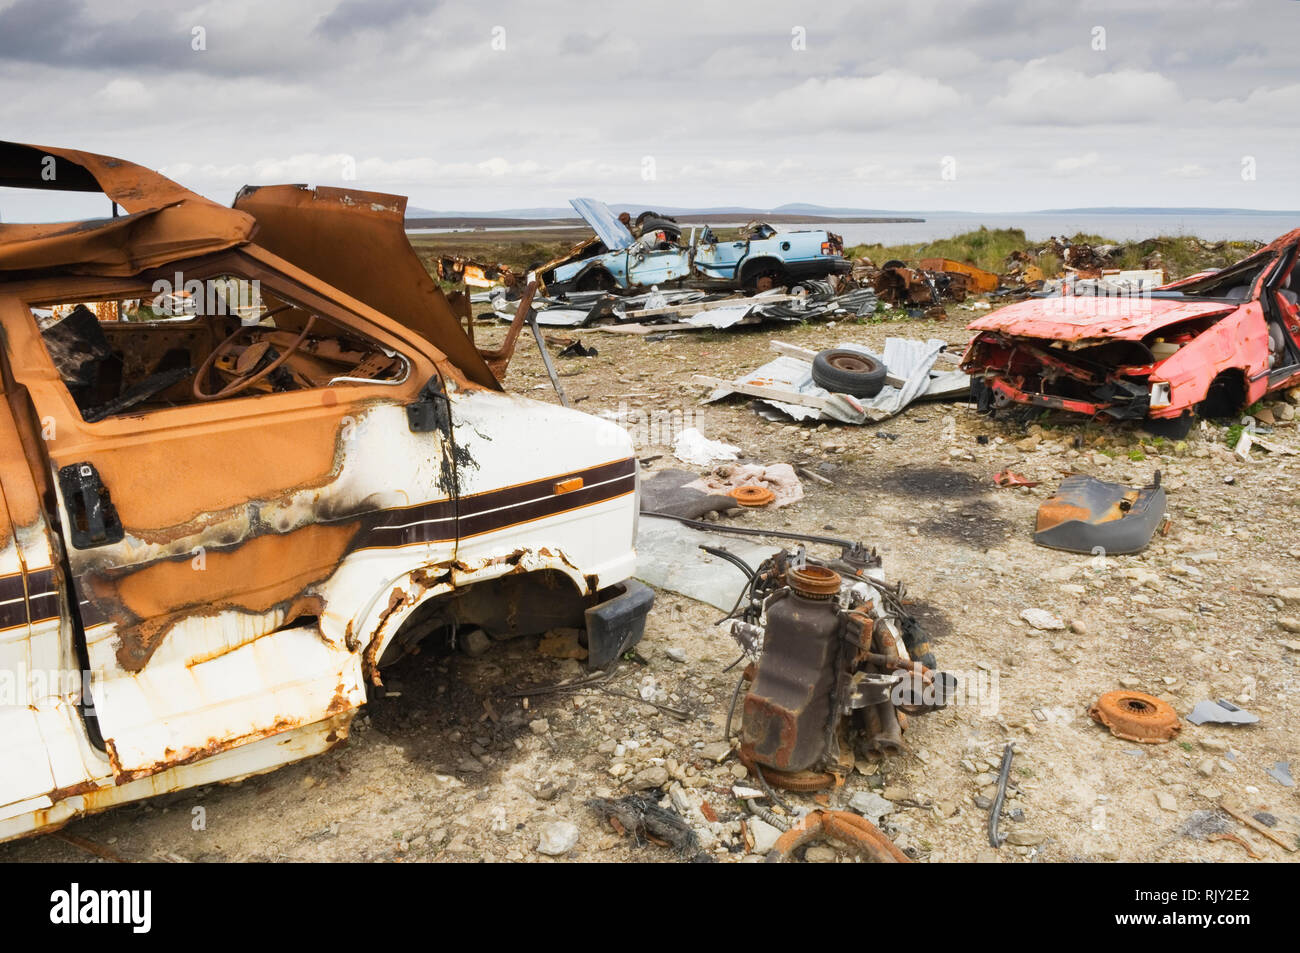 Abandoned cars in junkyard Stock Photo